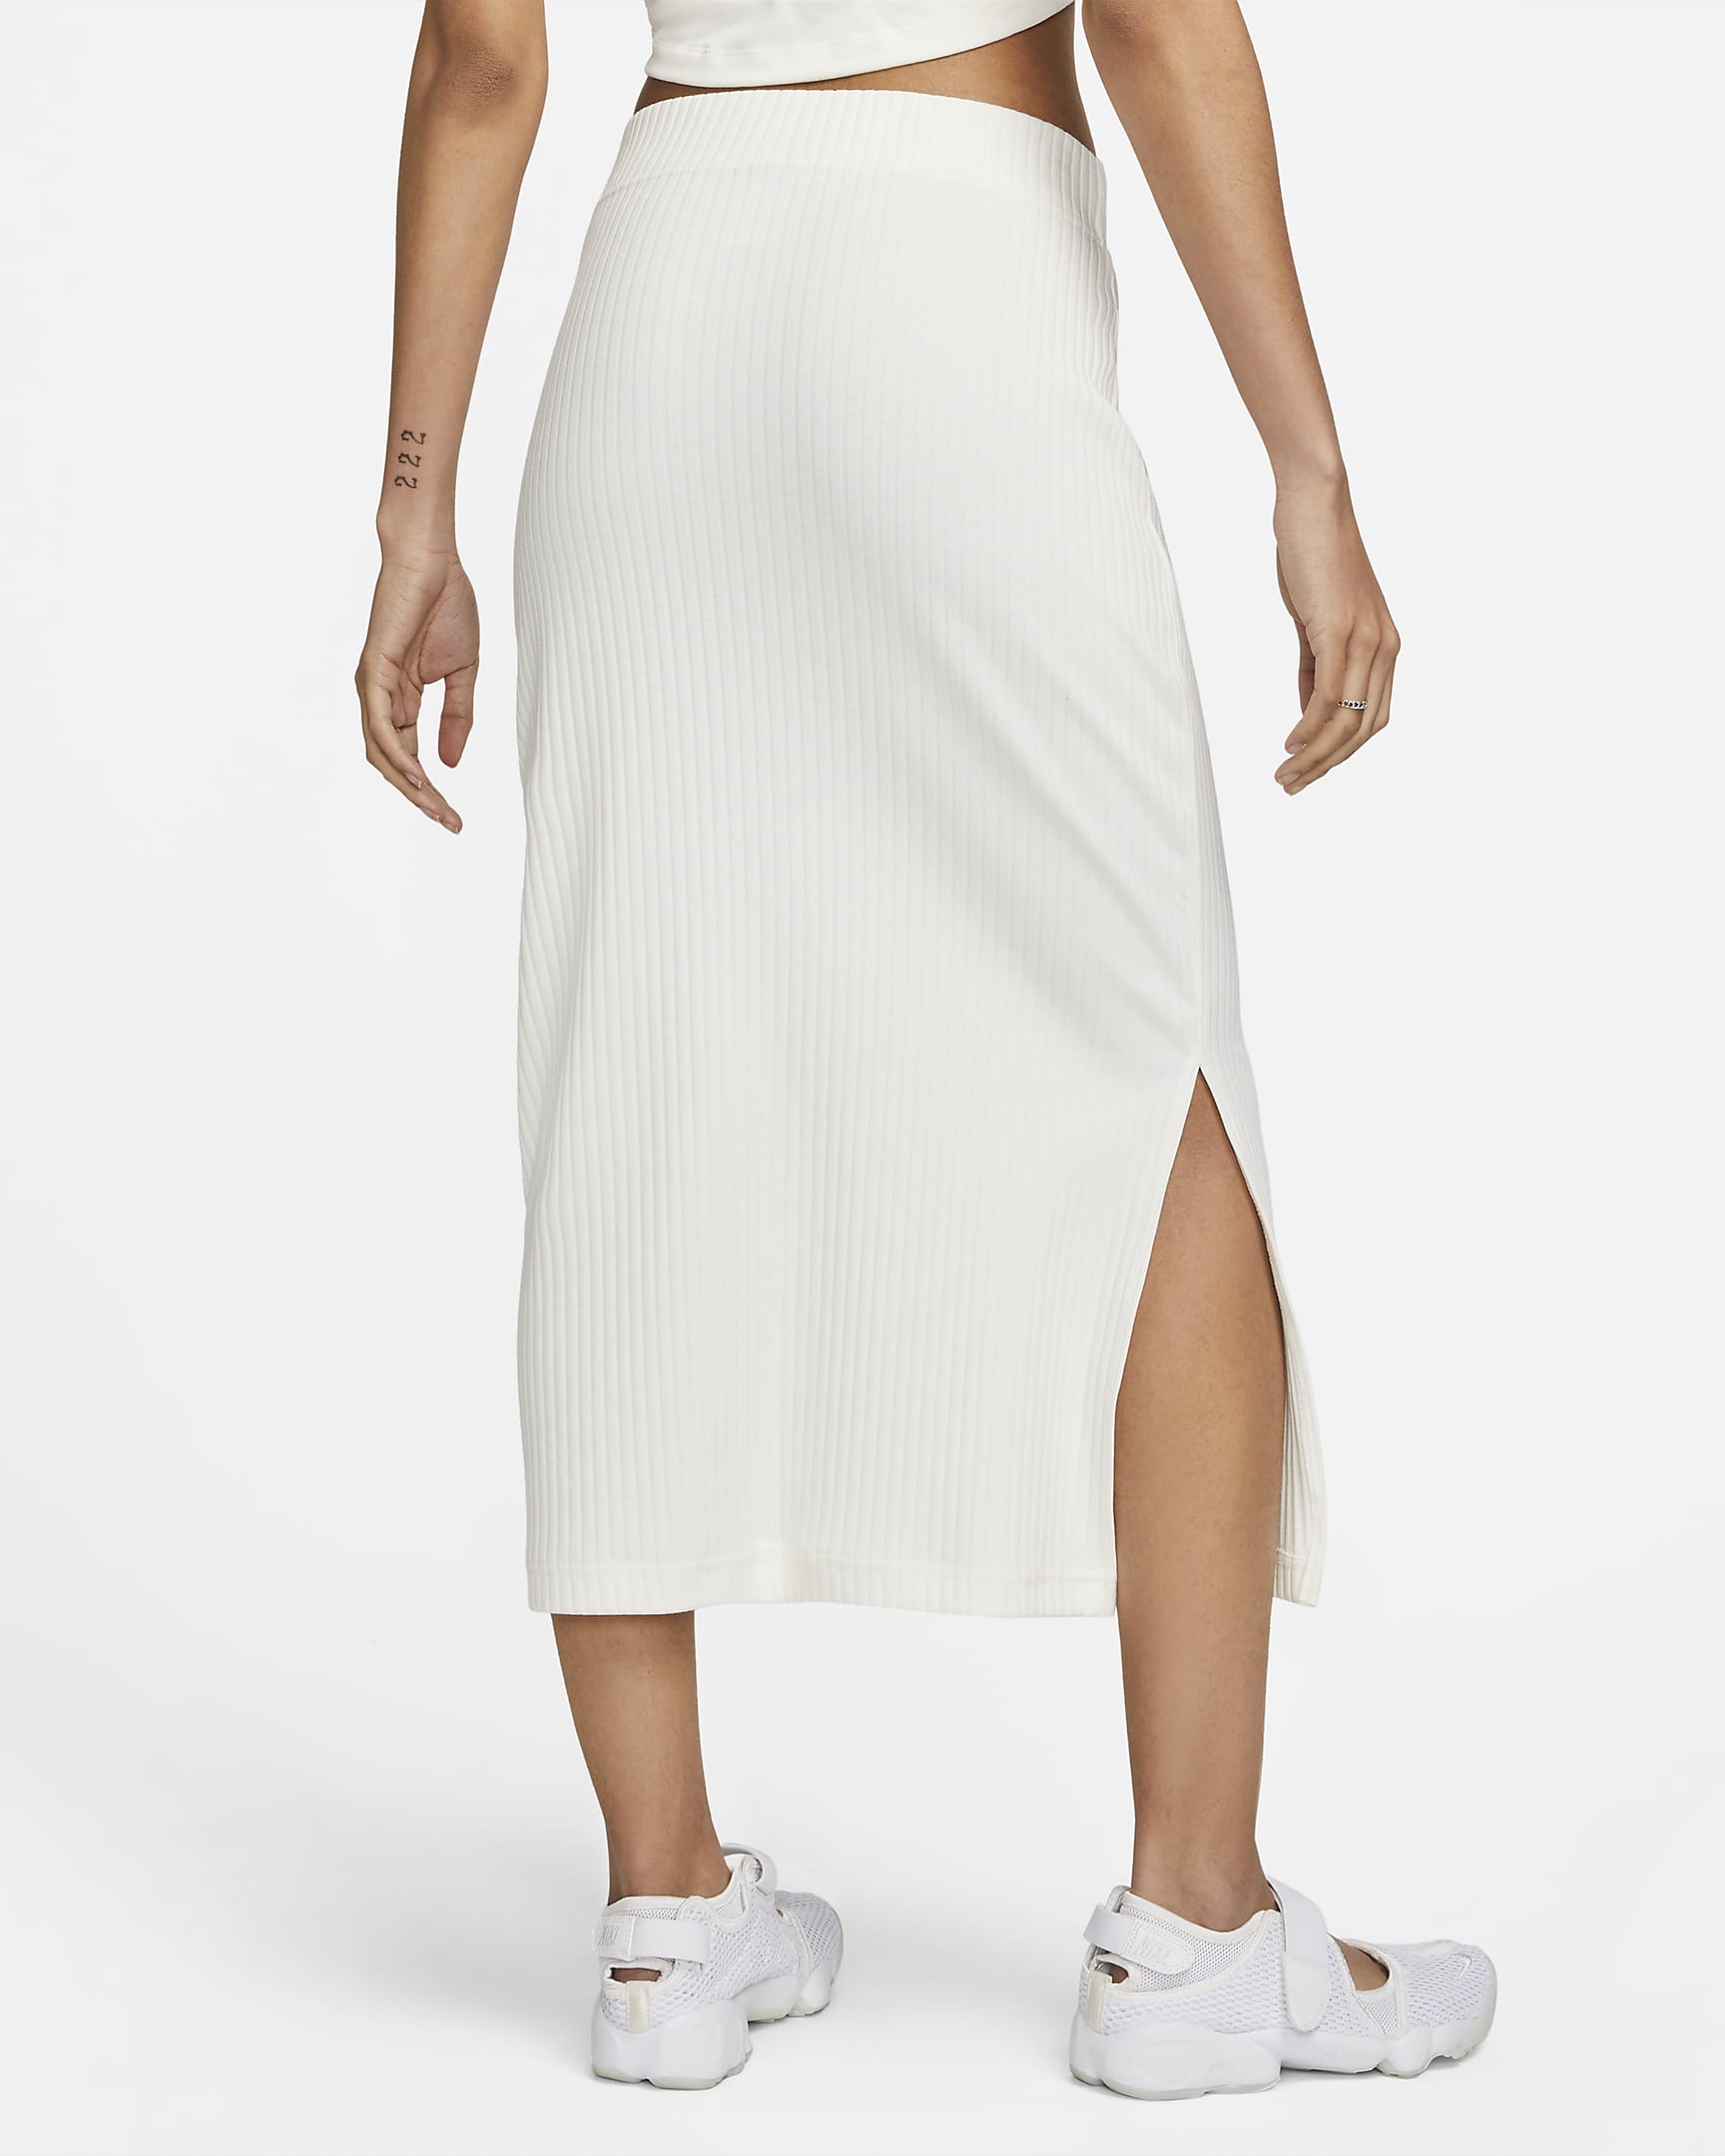 Nike Sportswear Women's High-Waisted Ribbed Jersey Skirt. Nike.com